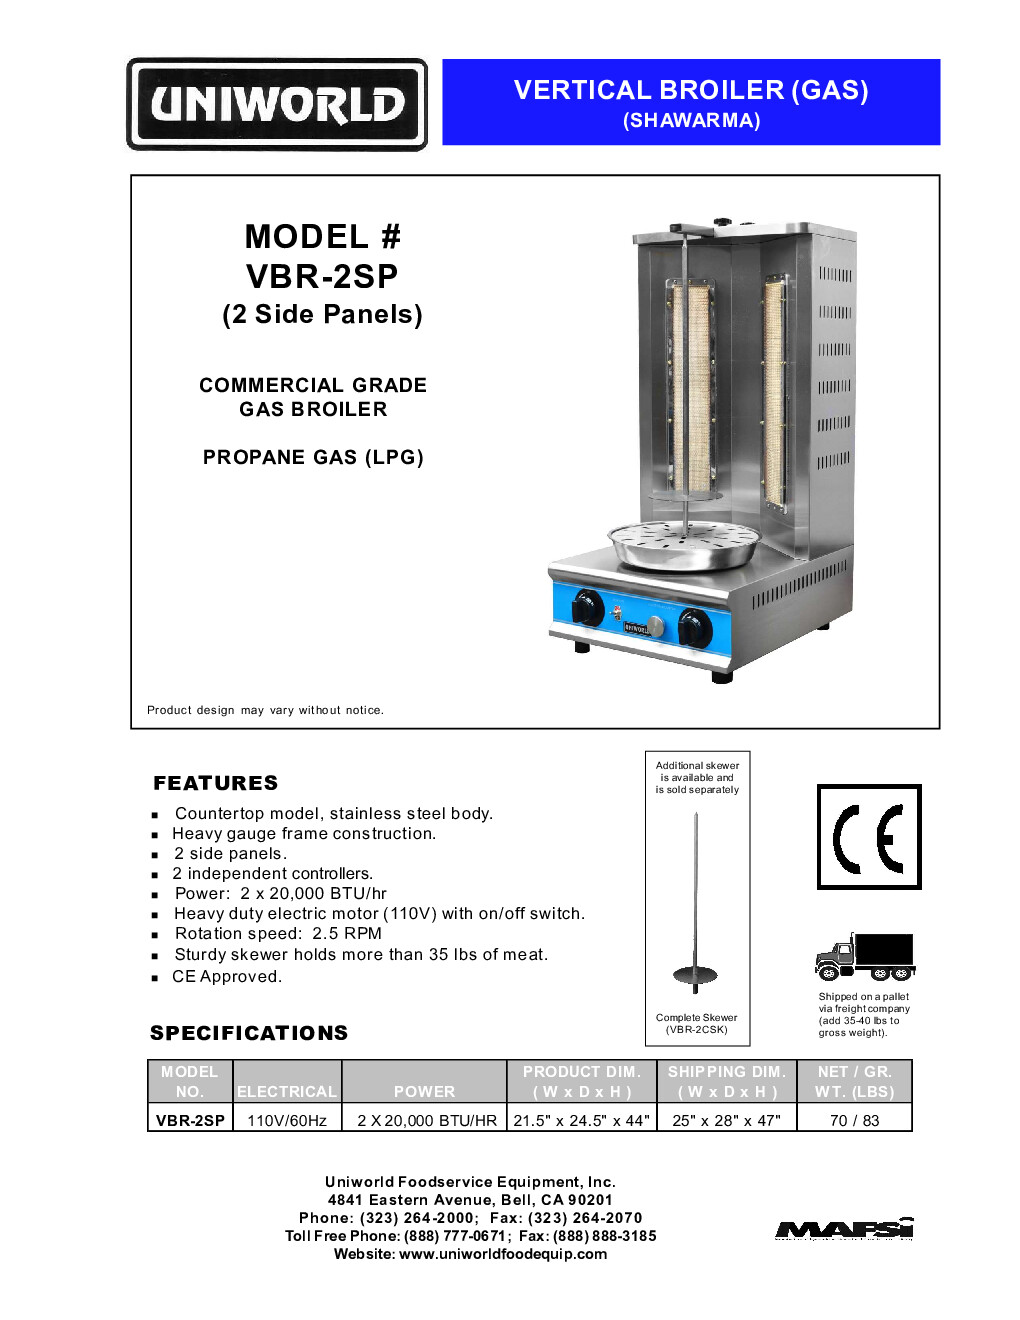 Uniworld VBR-2SP Gas Vertical Broiler (Gyro)